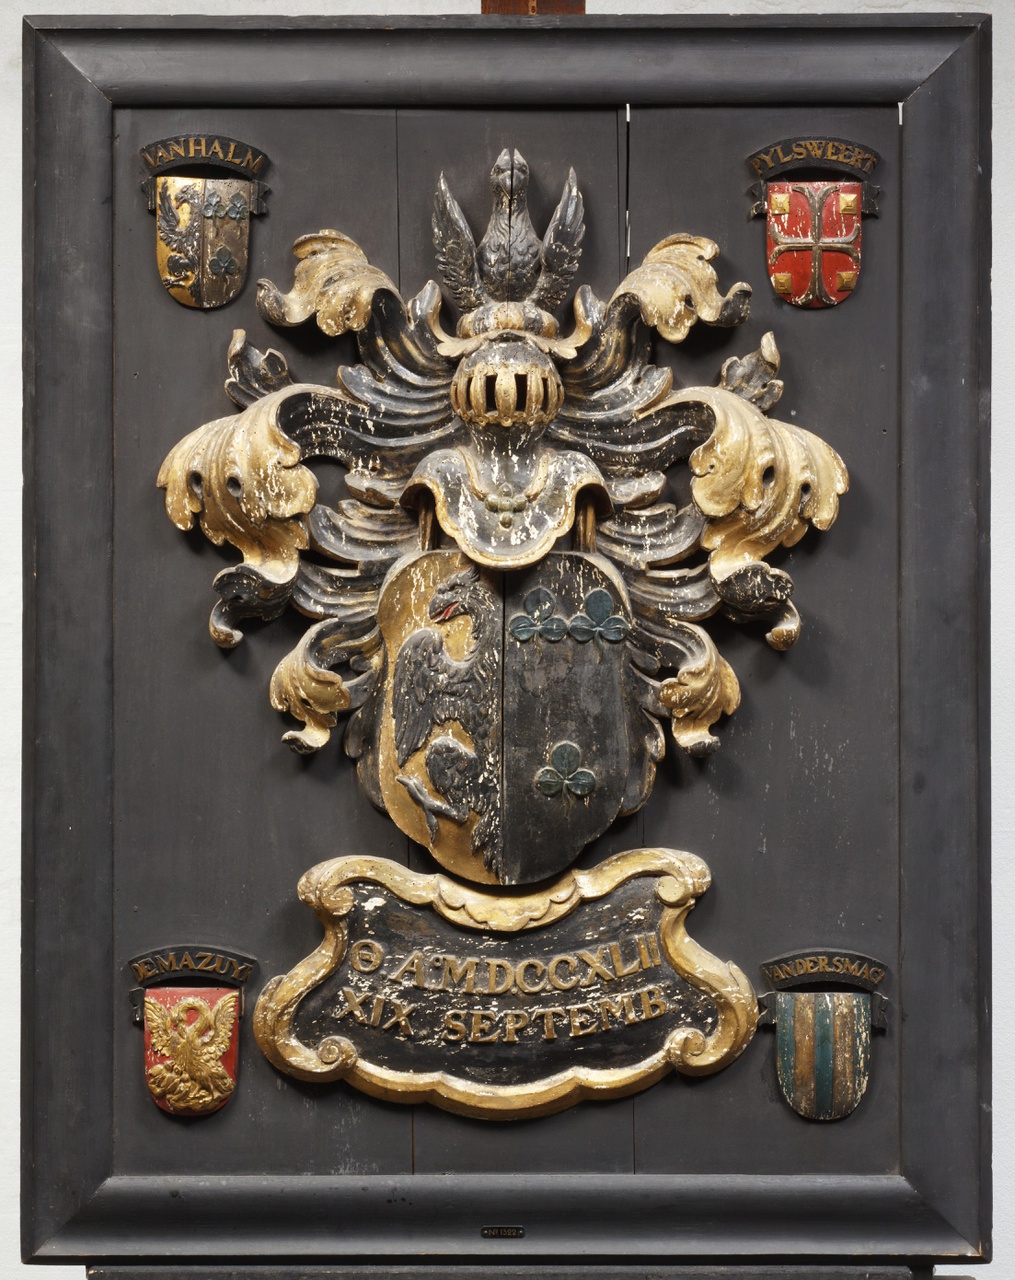 Rouwbord met wapens van Jacobus van Halm (gest. 1742)